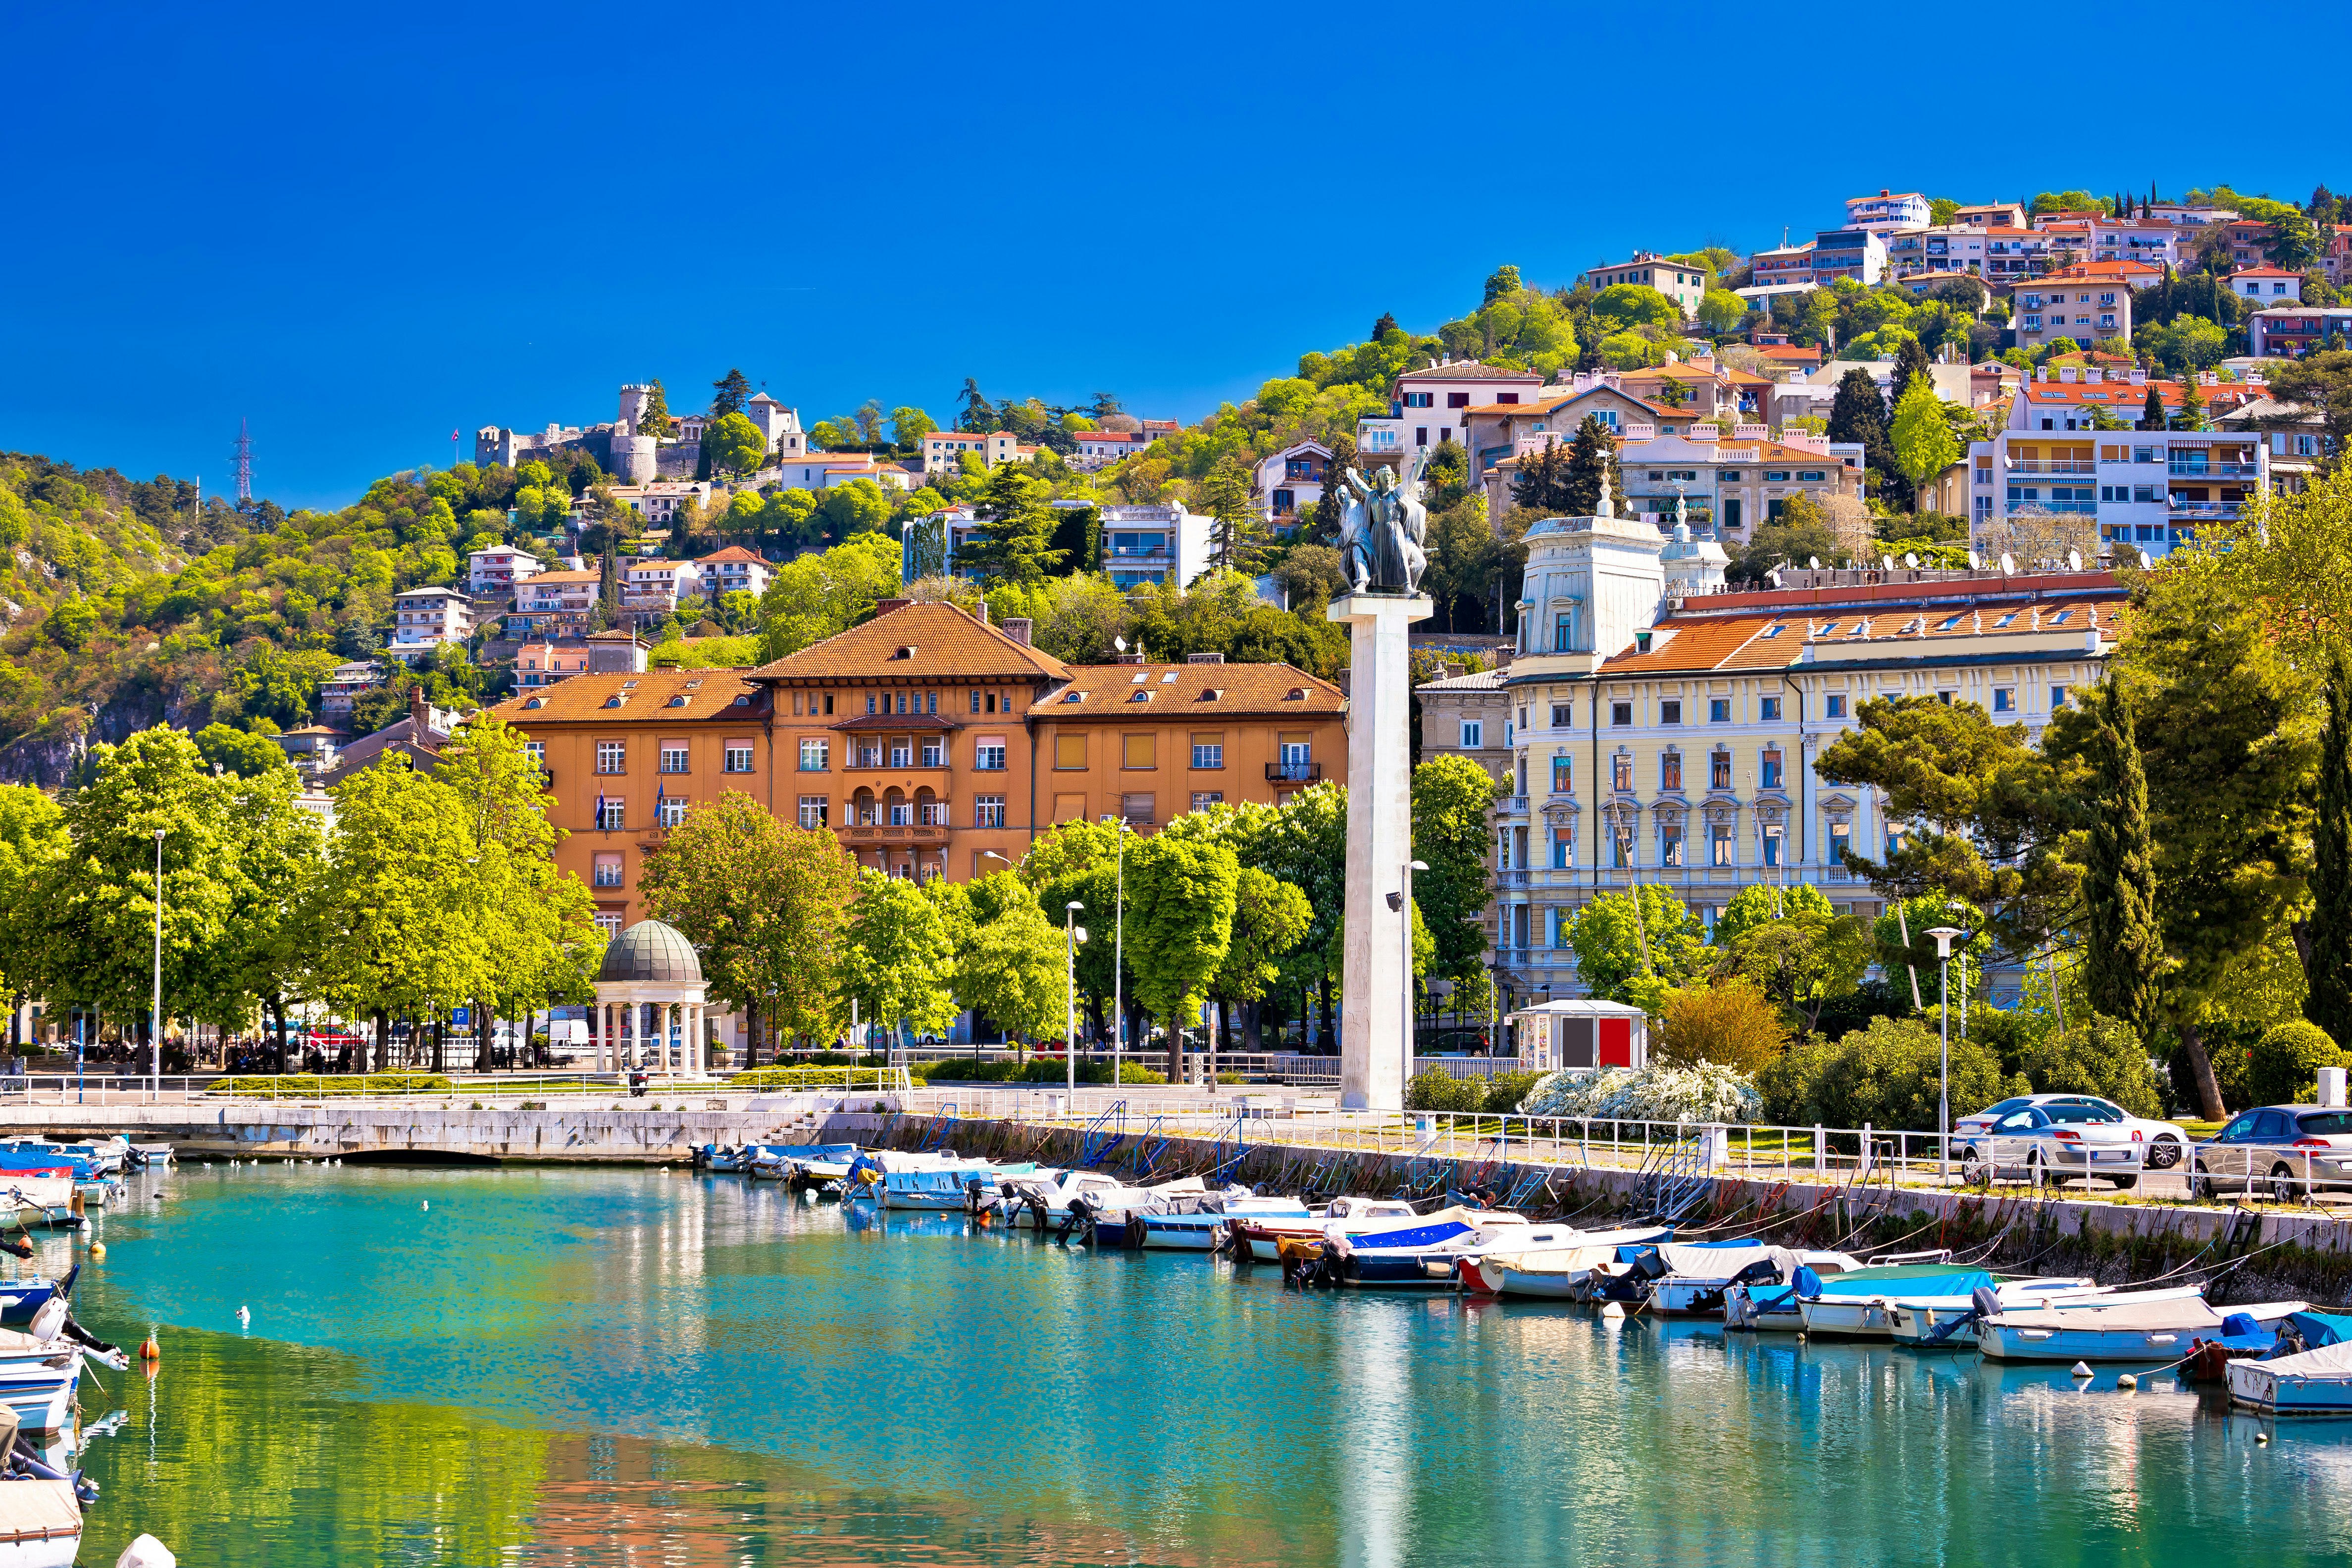 A picture of Rijeka and its riverfront